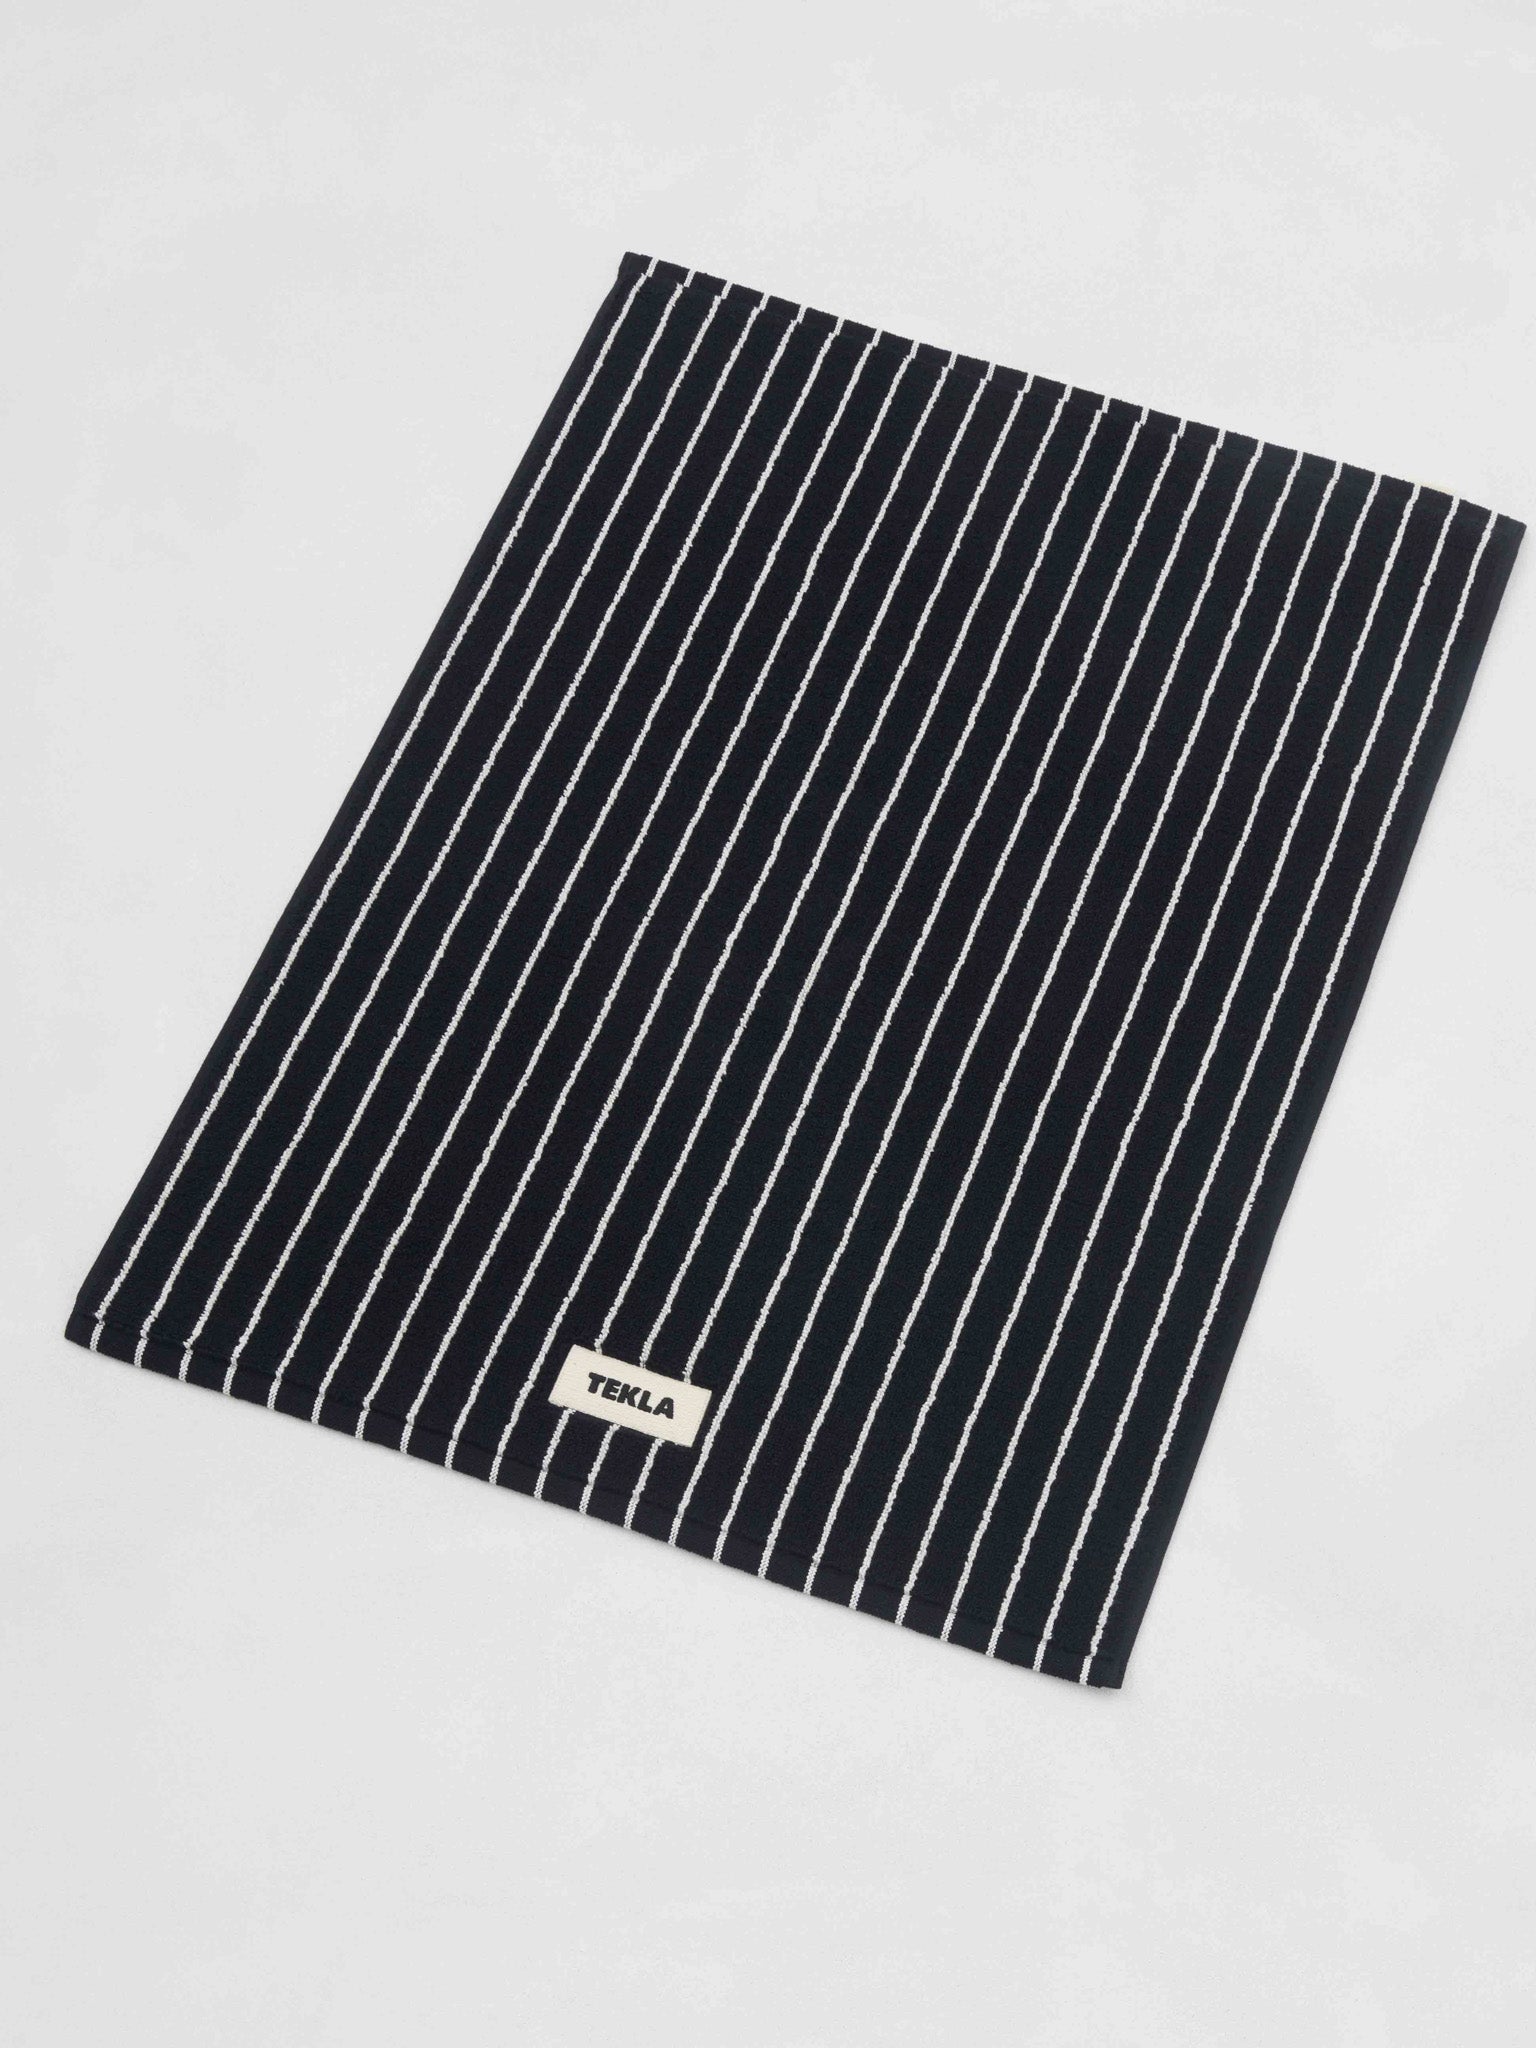 Tekla - Bath Mat in Black Stripes